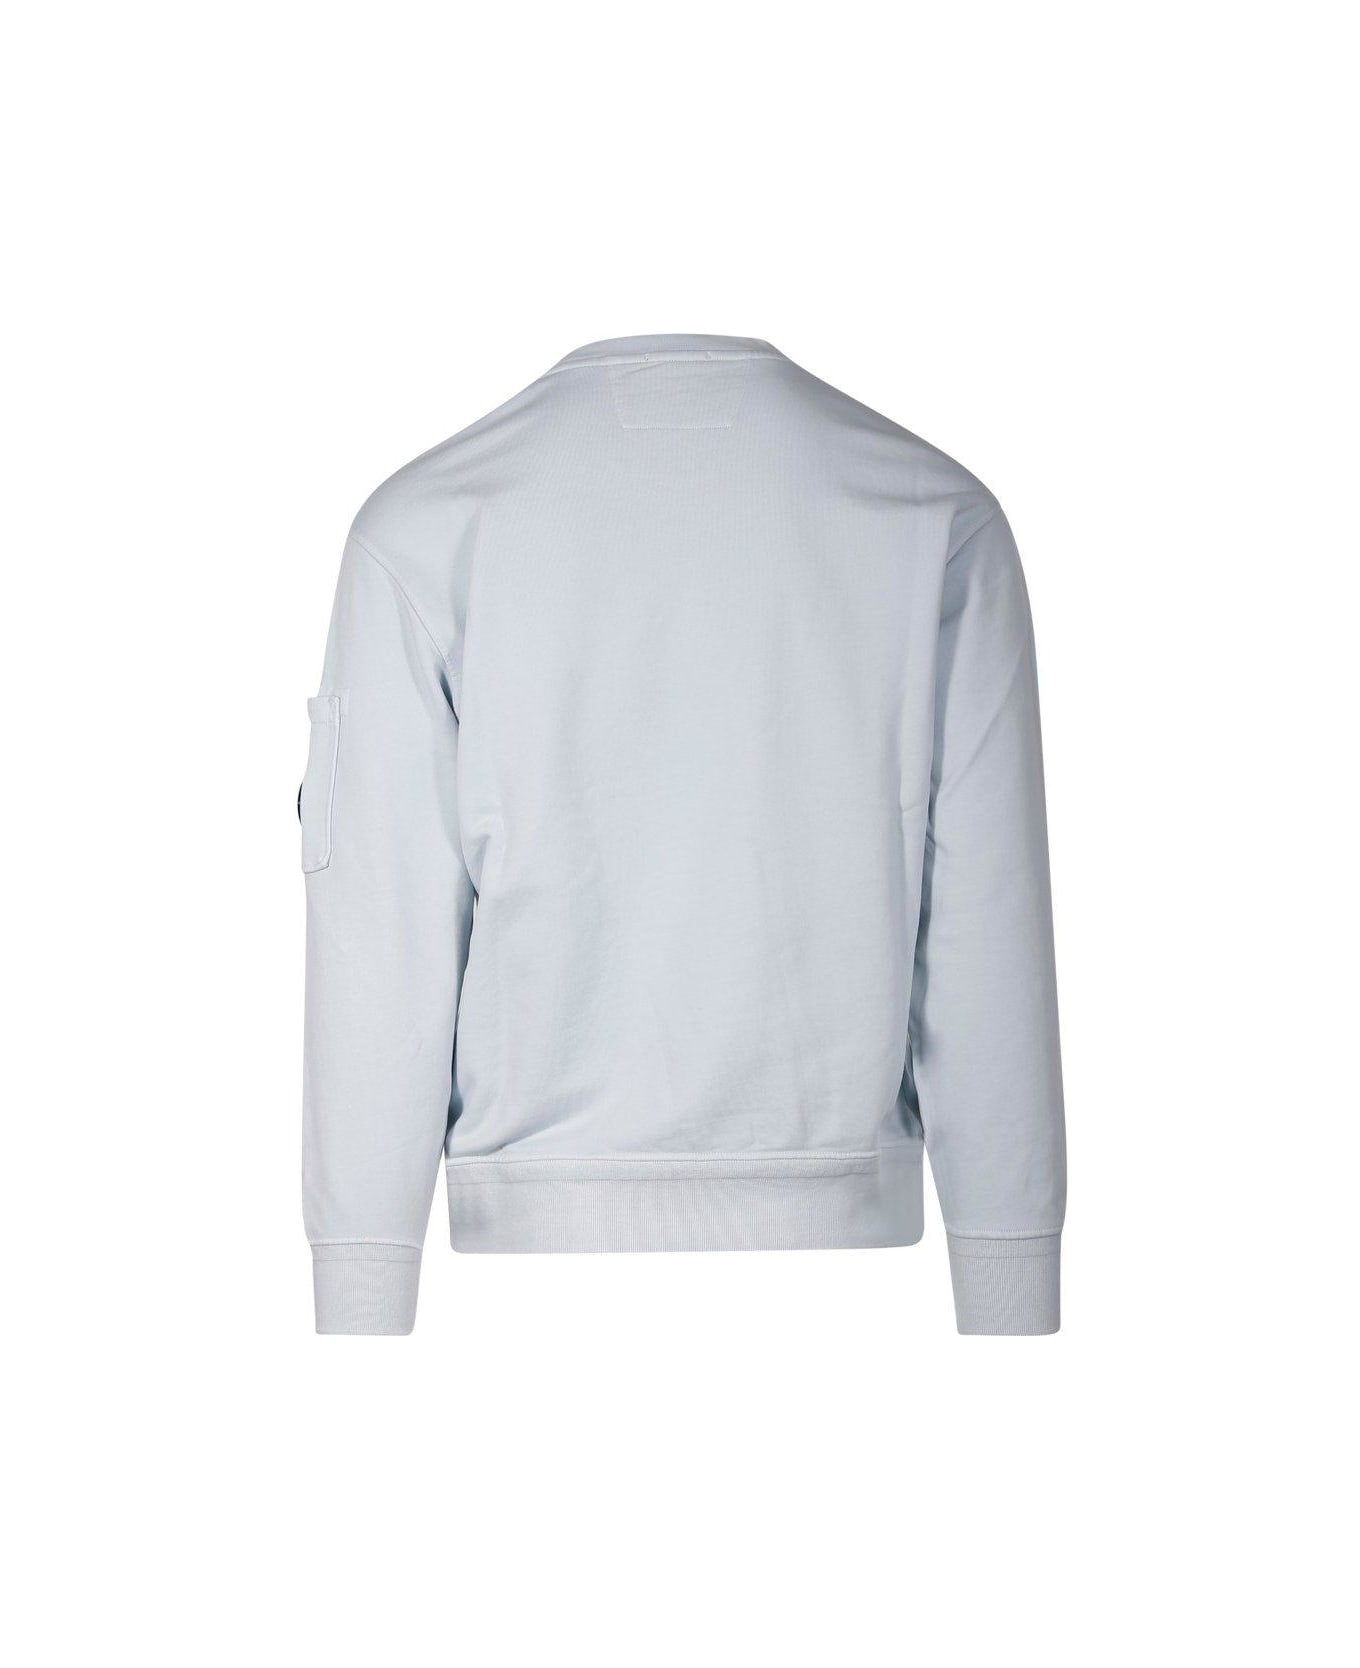 C.P. Company Crewneck Sleeved Sweatshirt - BLUE